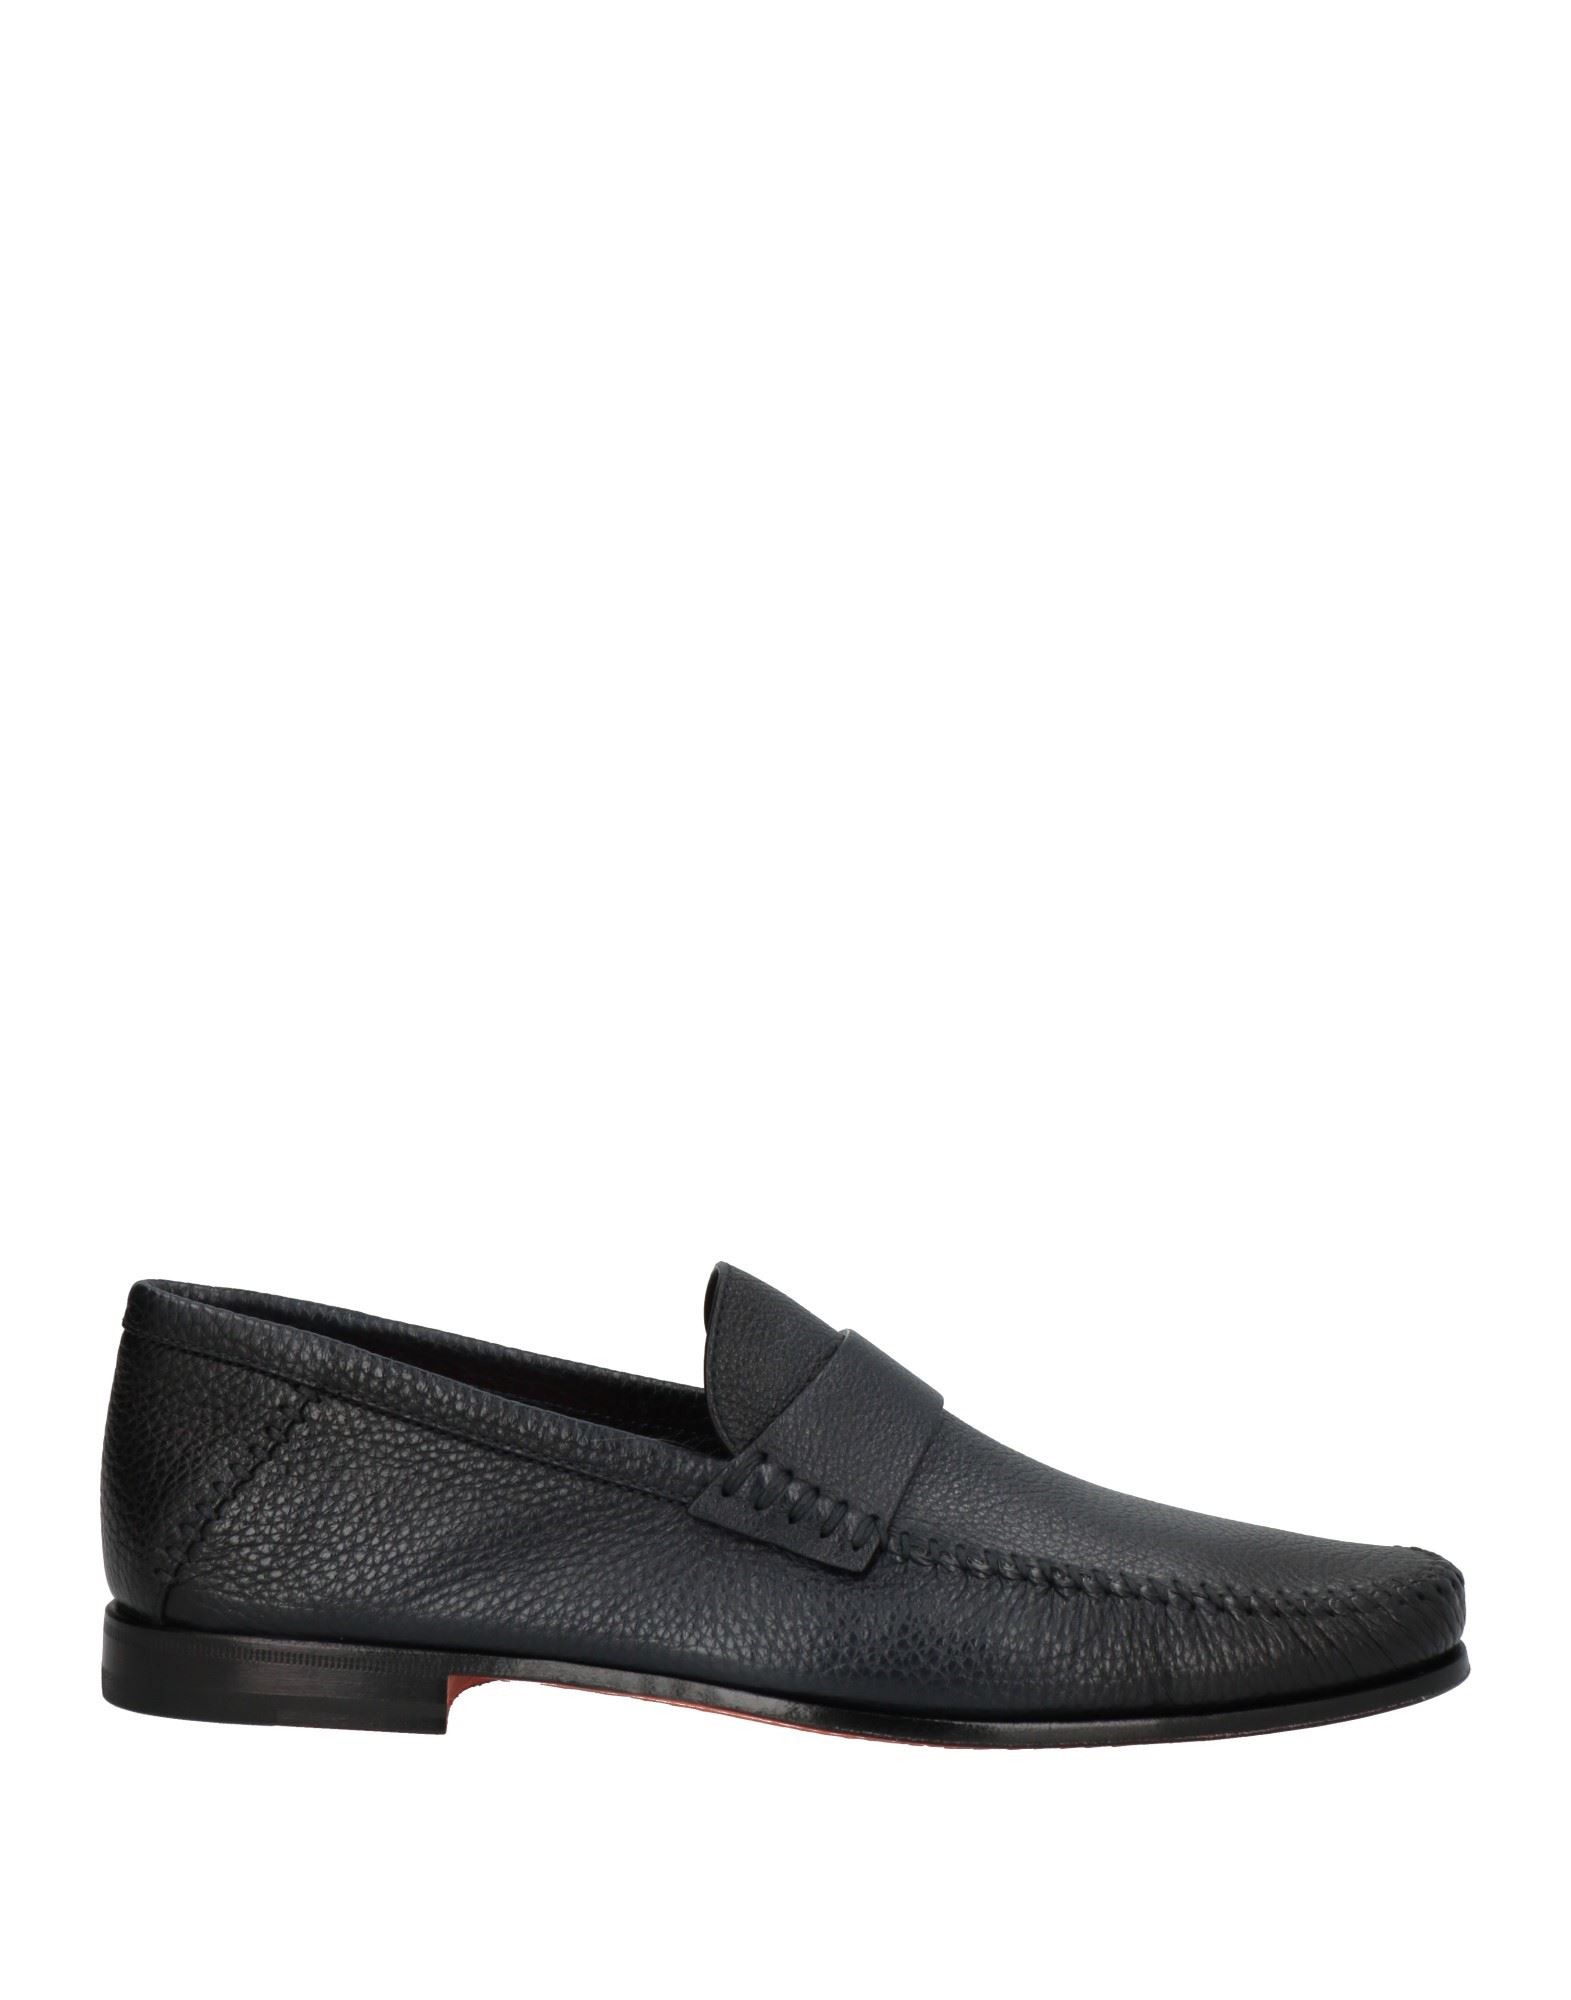 Santoni Man Loafers Black Size 8 Soft Leather